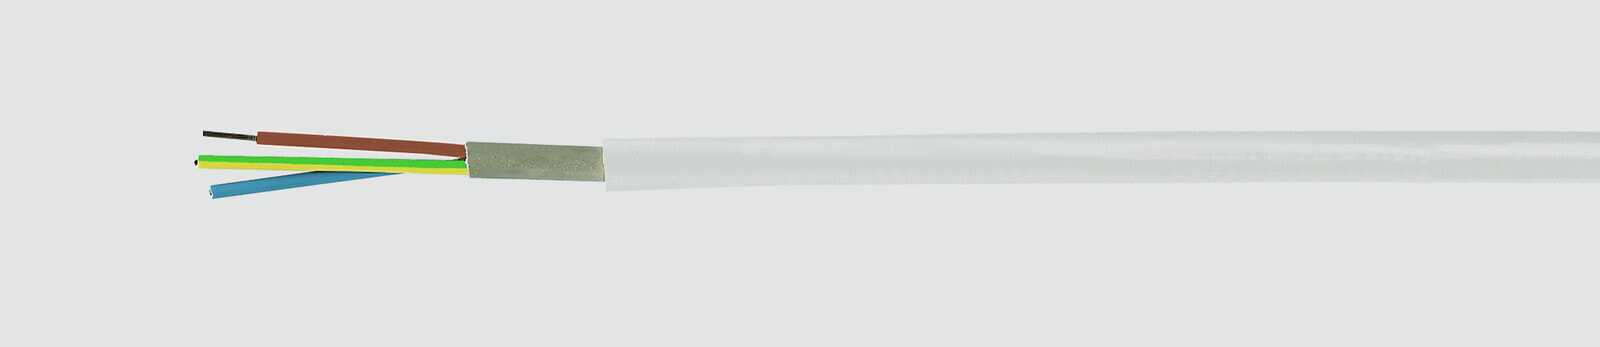 Helukabel 39057 - Low voltage cable - Grey - Polyvinyl chloride (PVC) - Cooper - 2.5 mm² - 72 kg/km